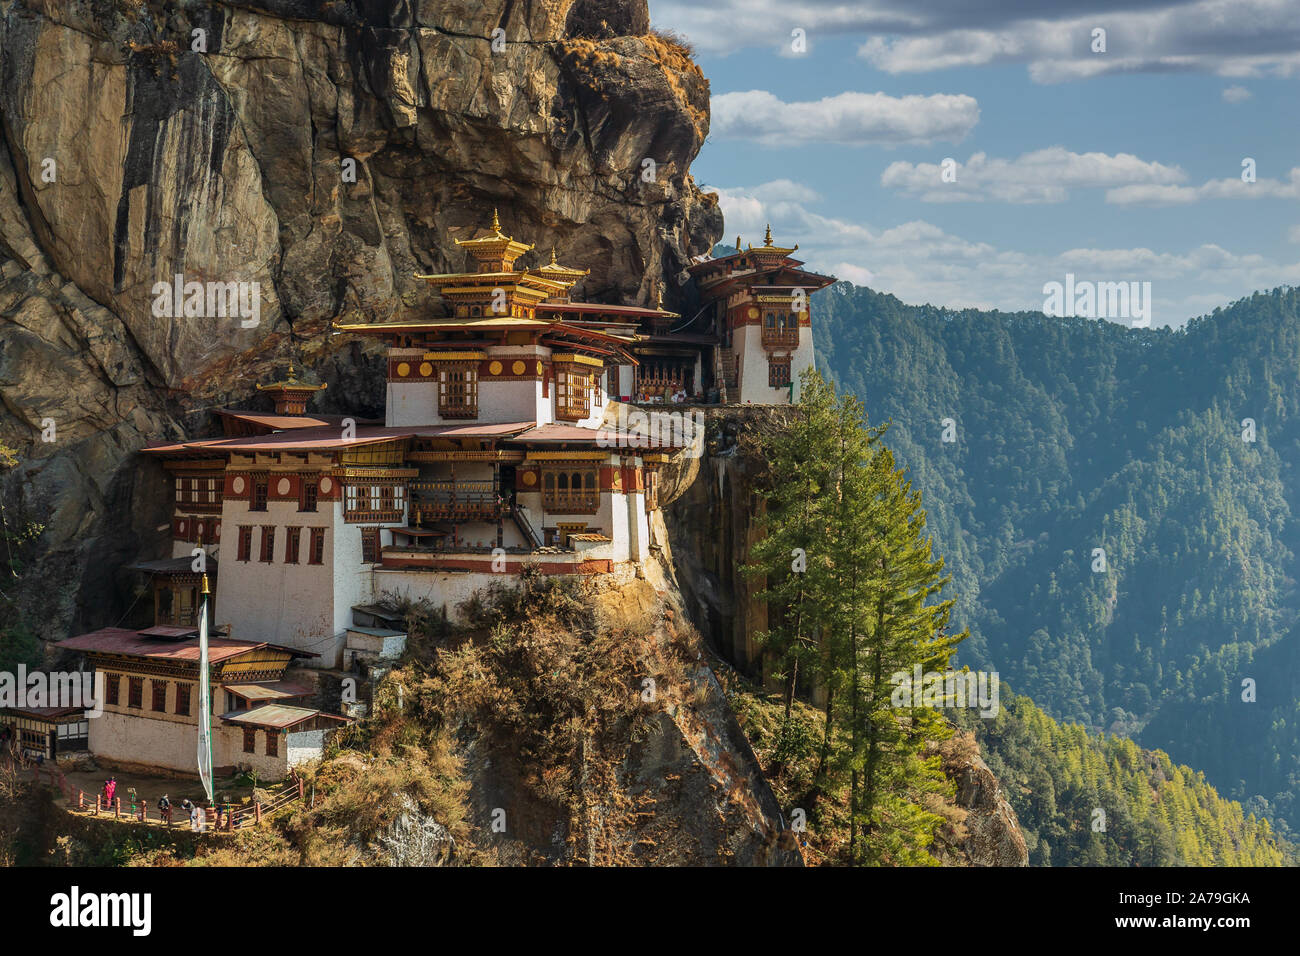 Tiger's nest Temple or Taktsang Palphug Monastery (Bhutan) Stock Photo